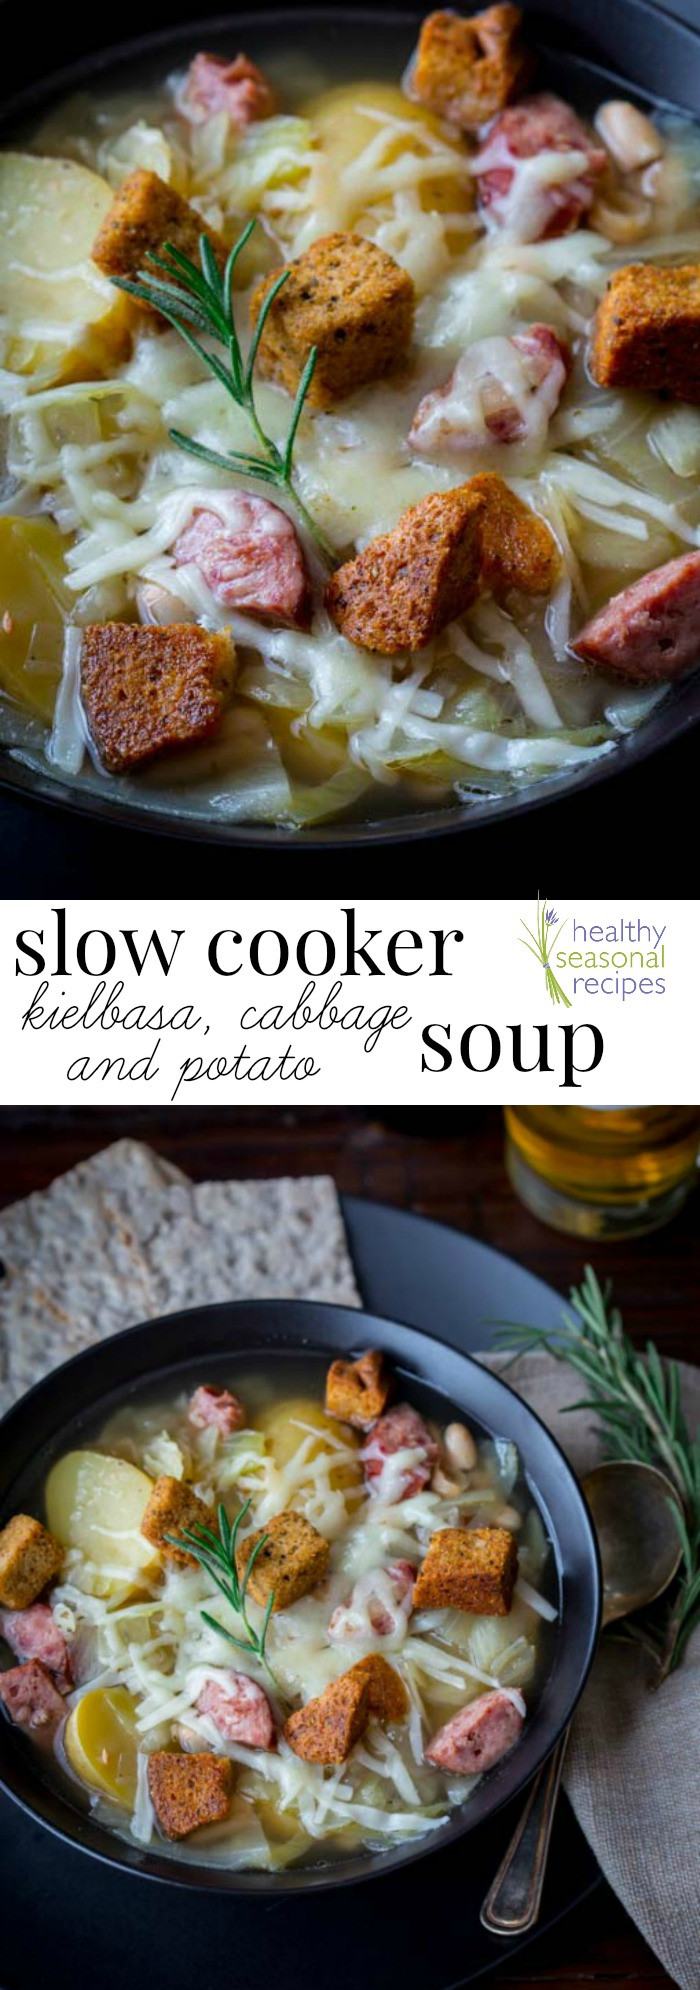 Healthy Potato Soup Recipe Slow Cooker
 slow cooker kielbasa cabbage and potato soup Healthy